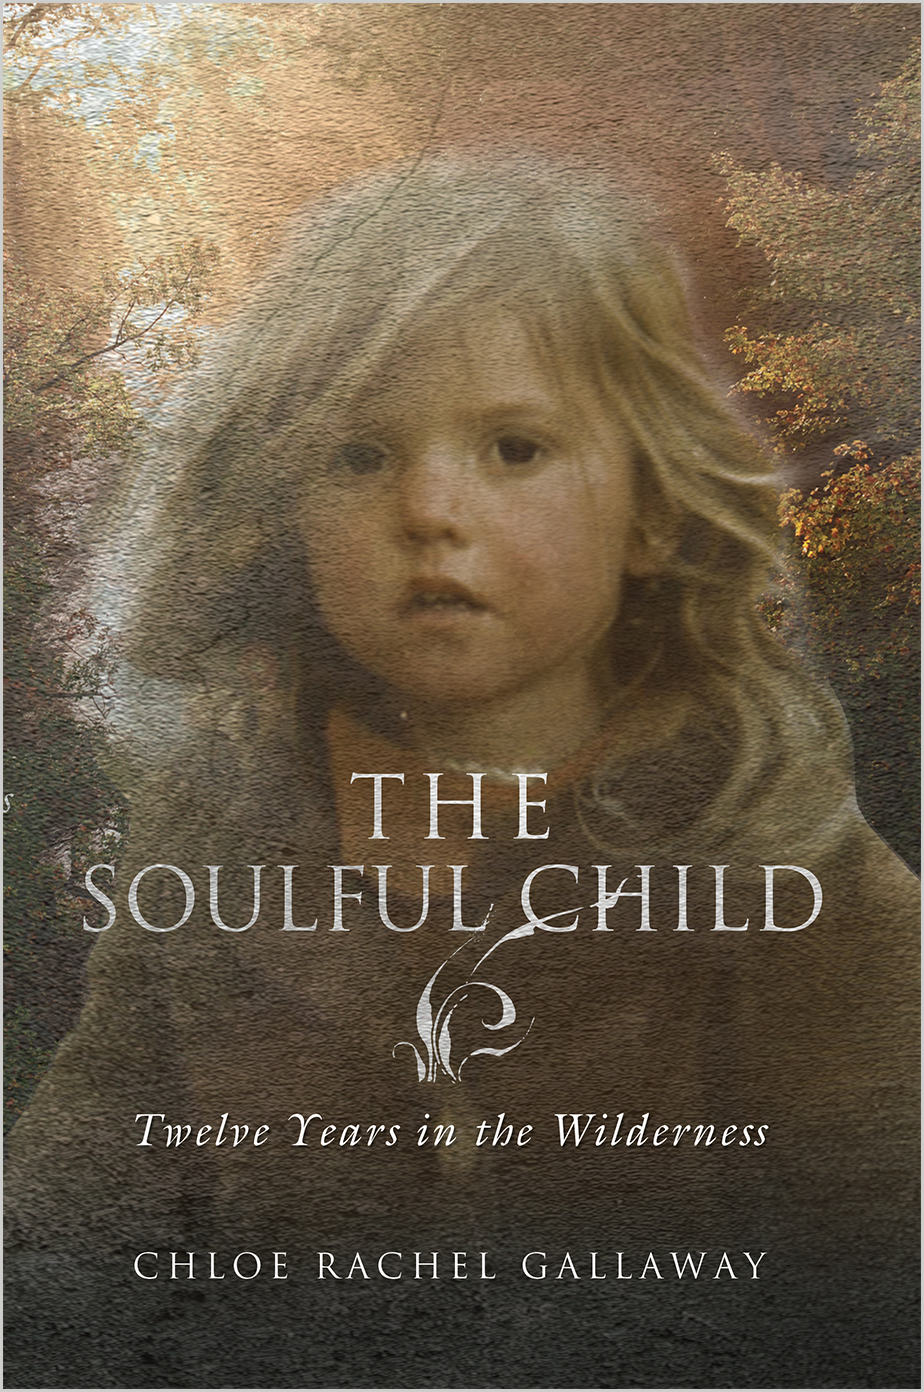 The Soulful Child by Chloe Rachel Gallaway